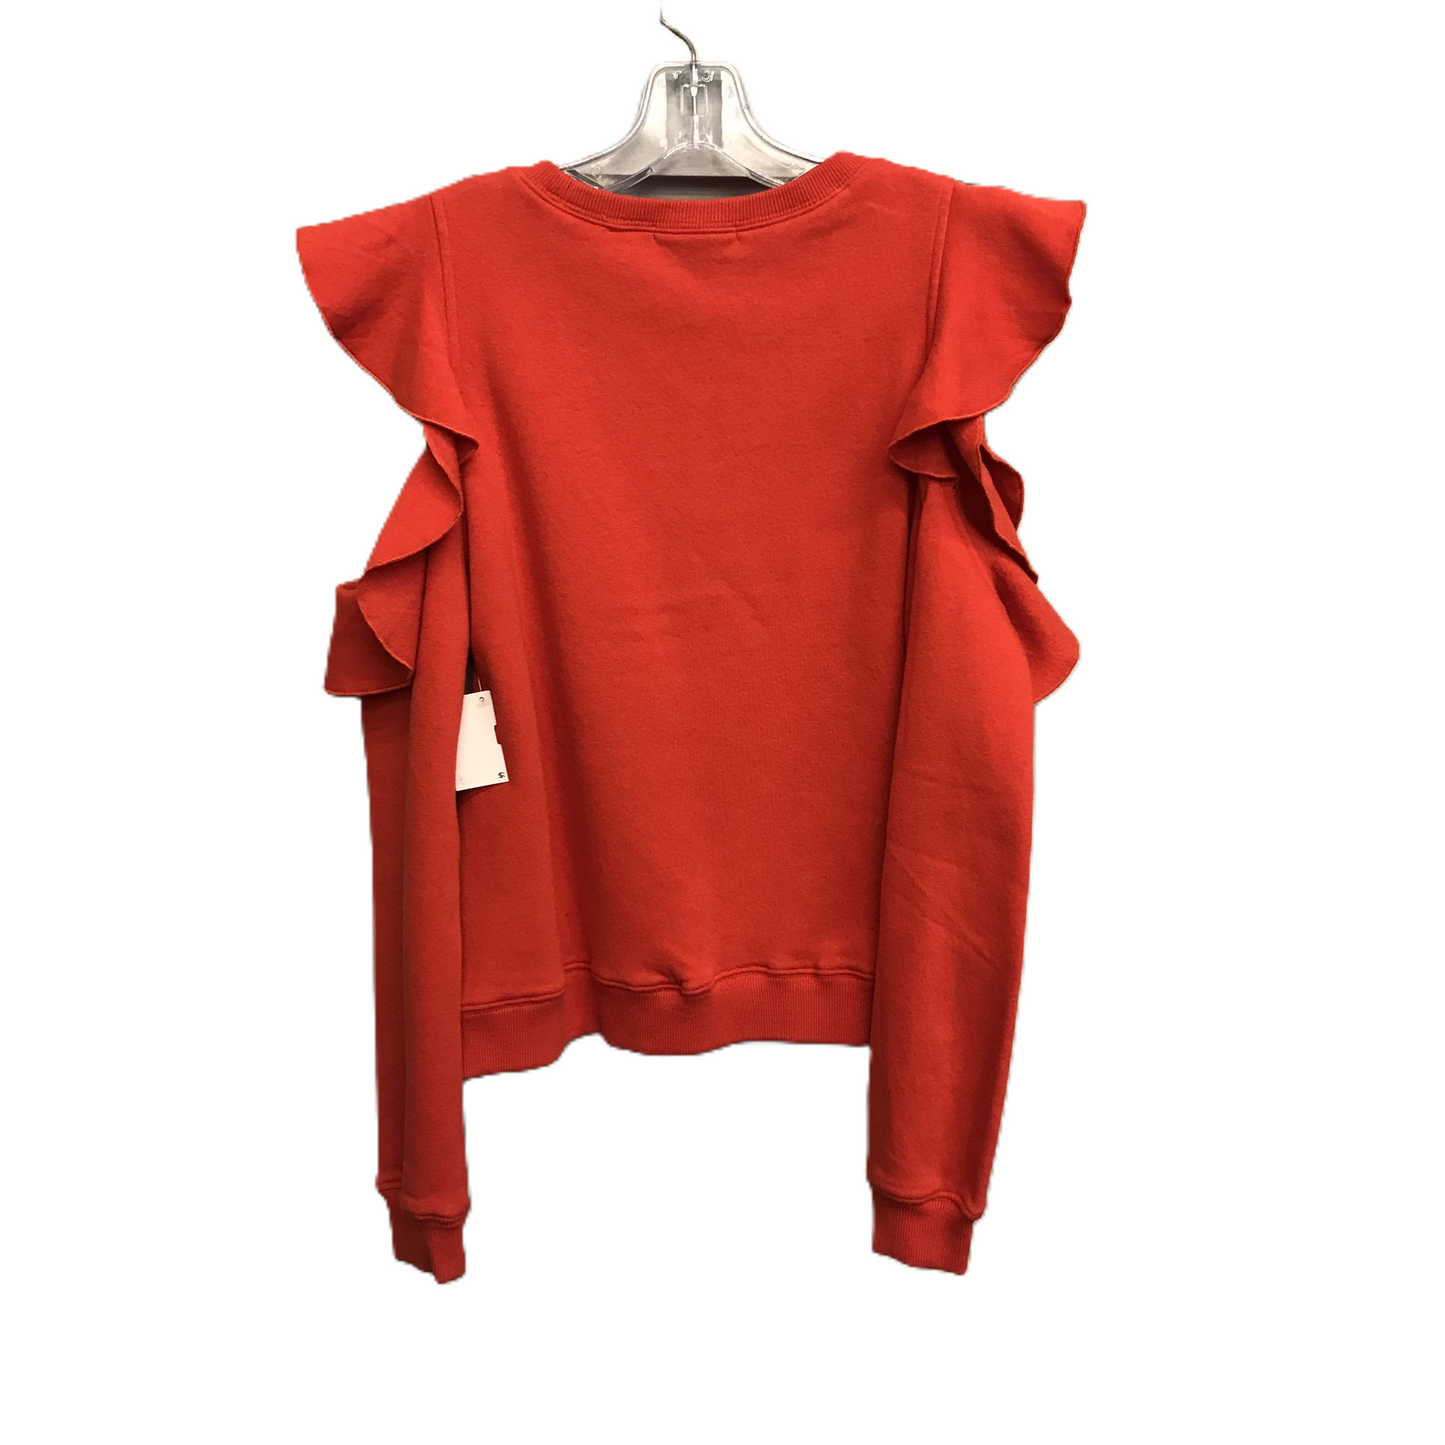 Orange Top Long Sleeve By Rebecca Minkoff, Size: S